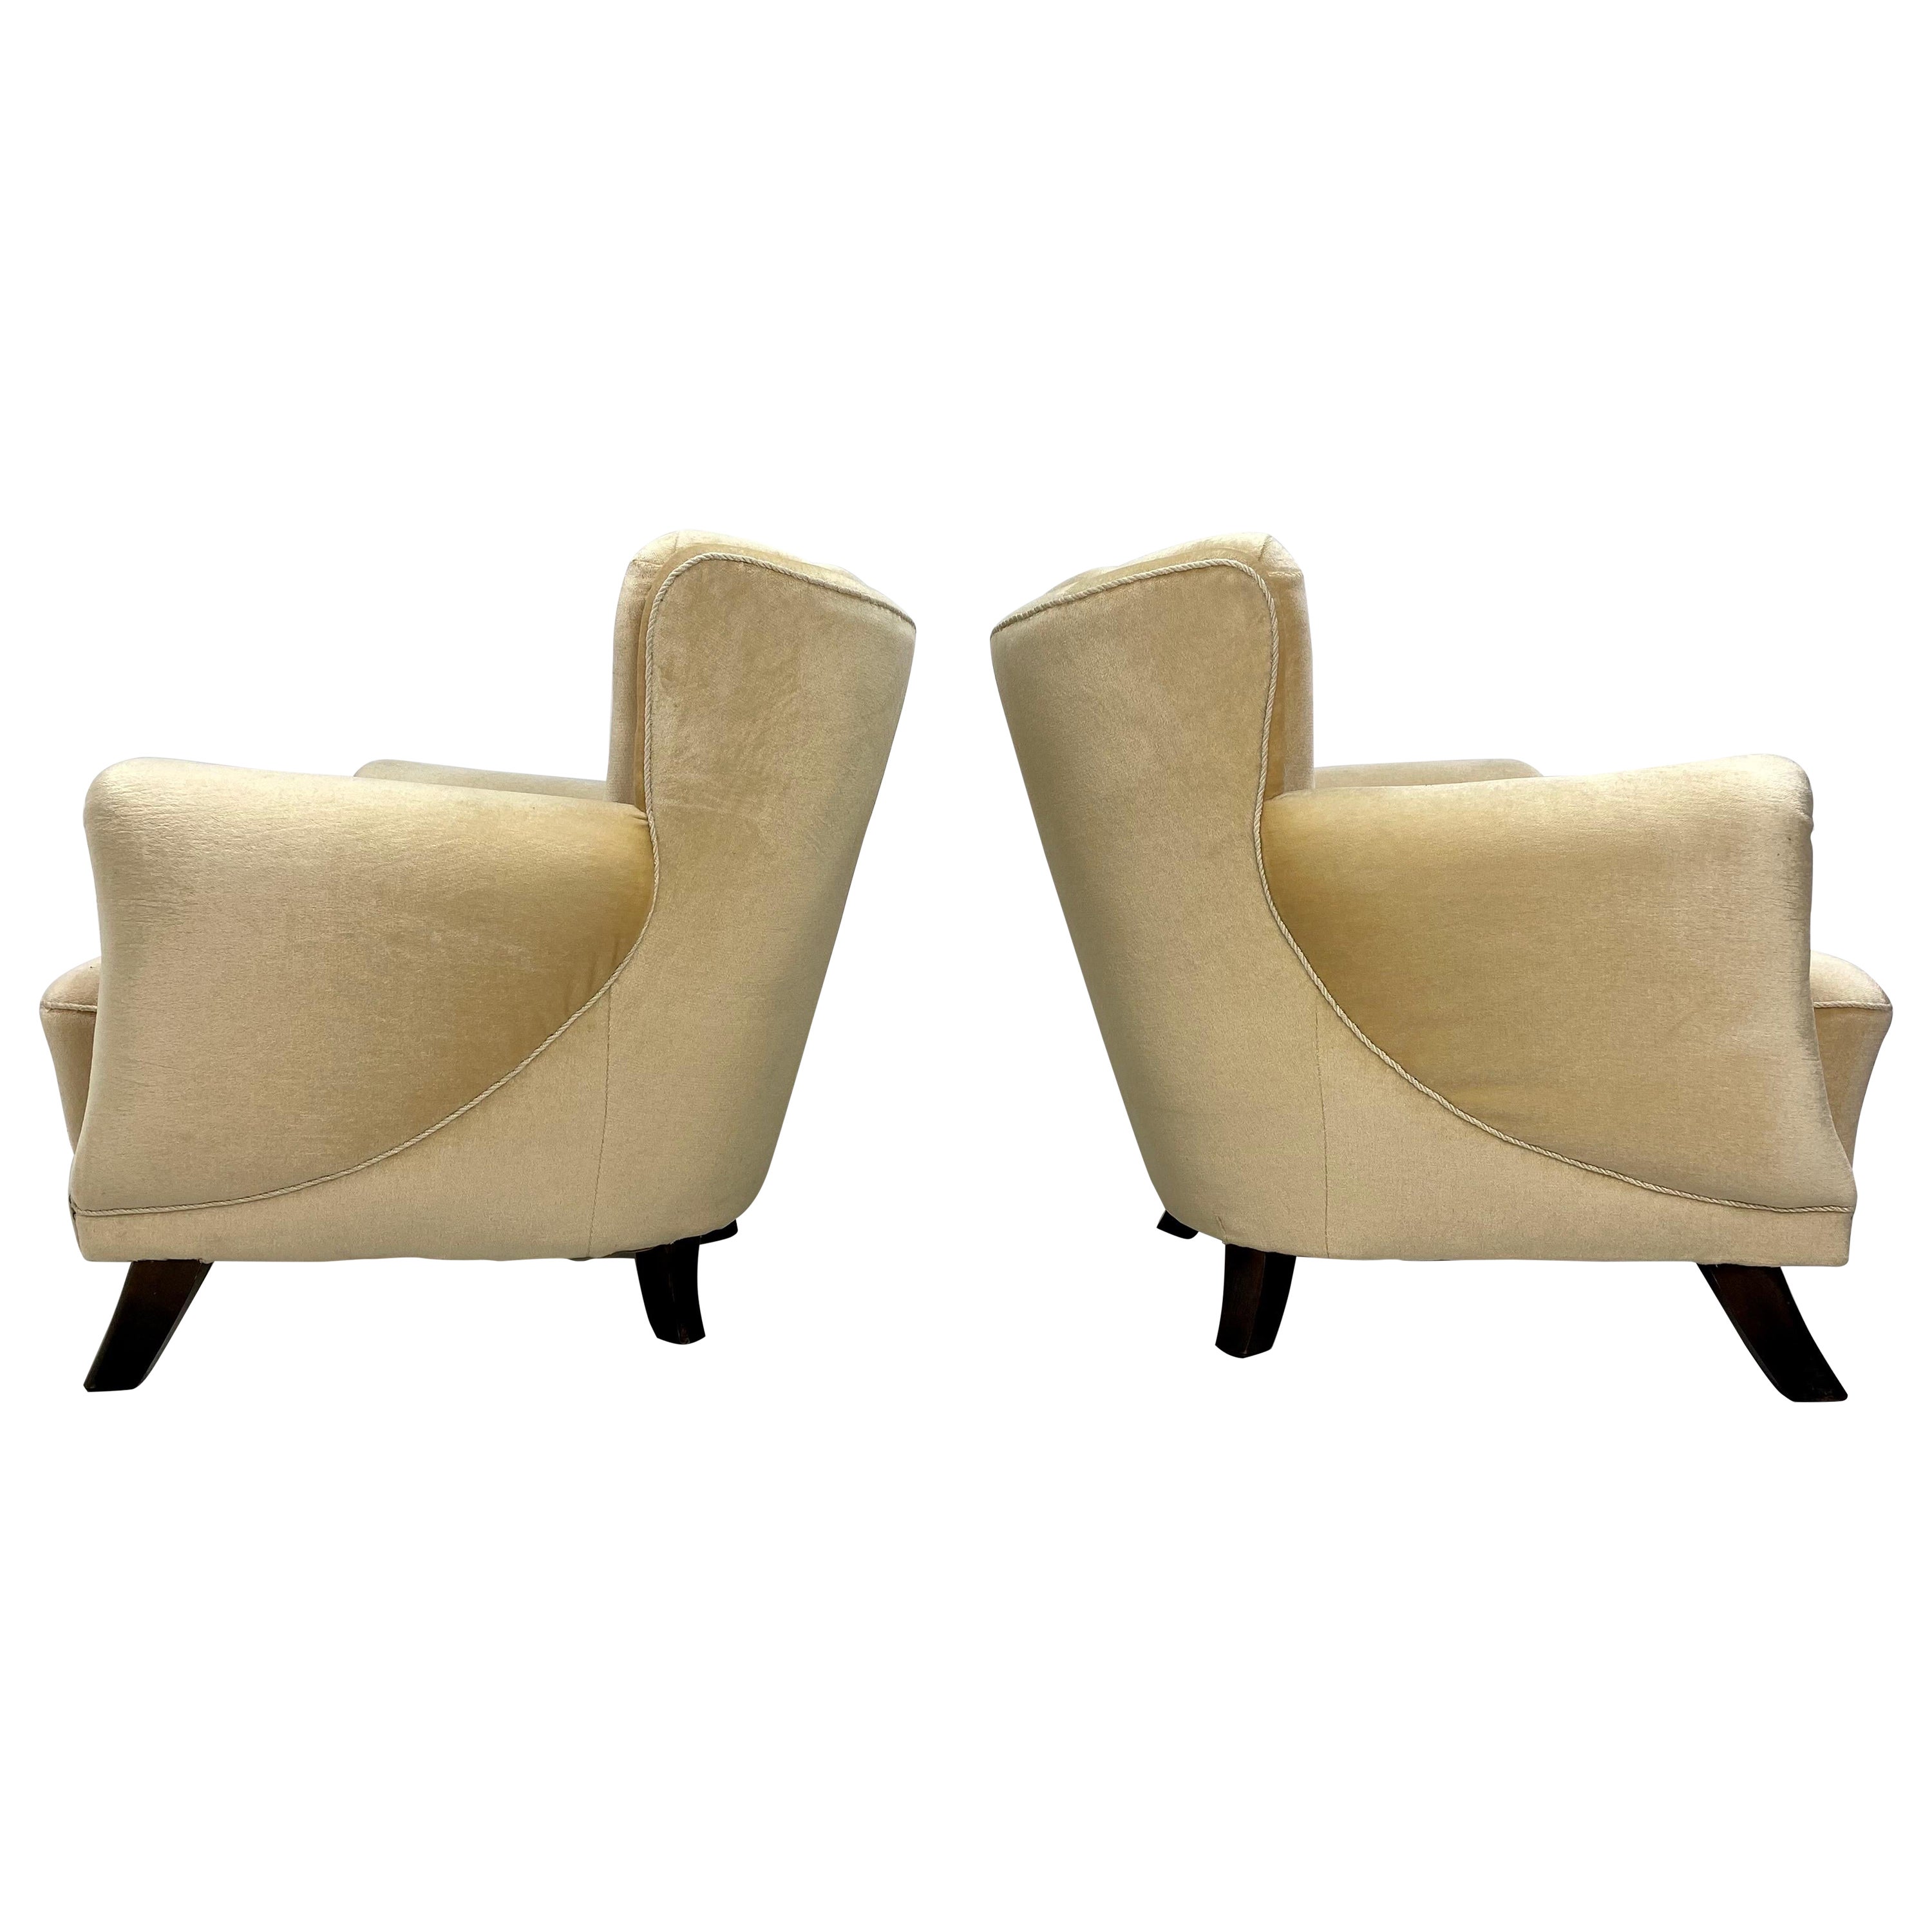 Pair of 1930s Swedish Lounge Chairs